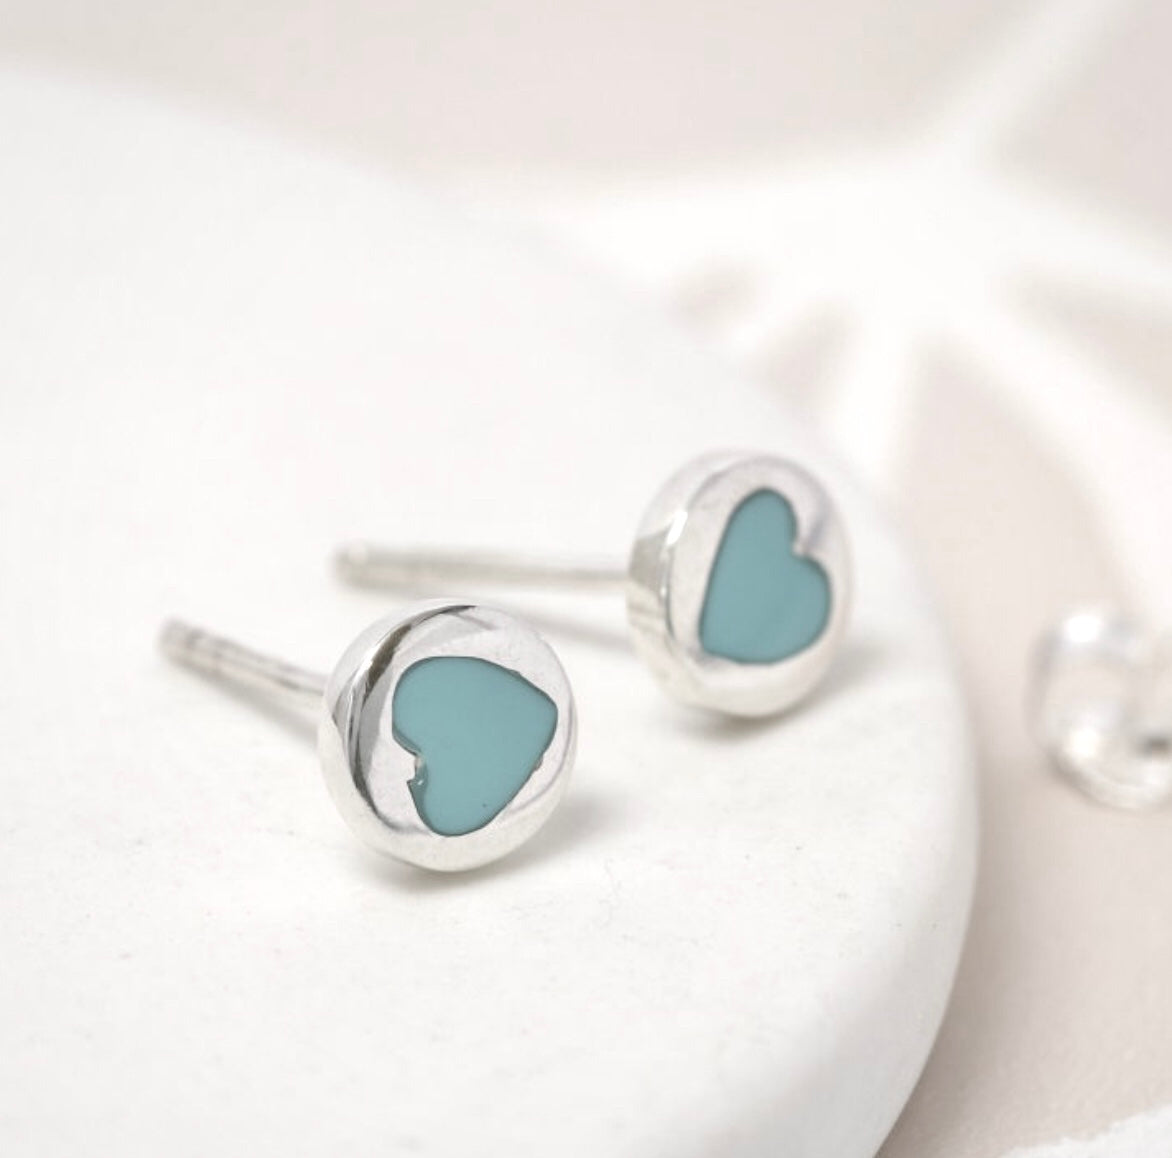 Turquoise heart Sterling silver earrings